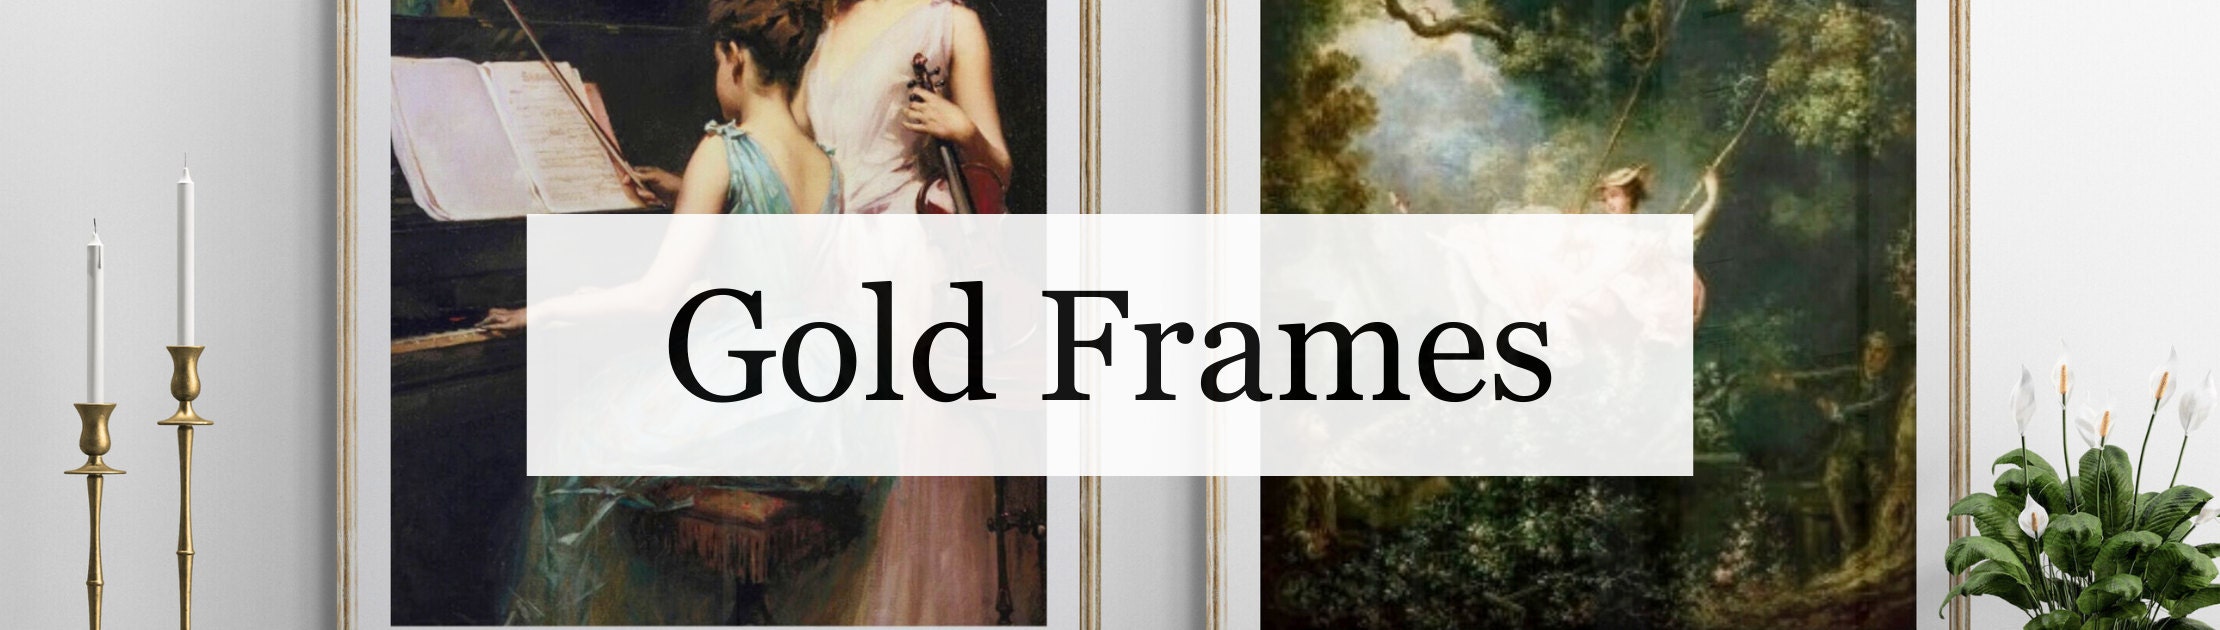 gold frame ideas for a 5x7 print